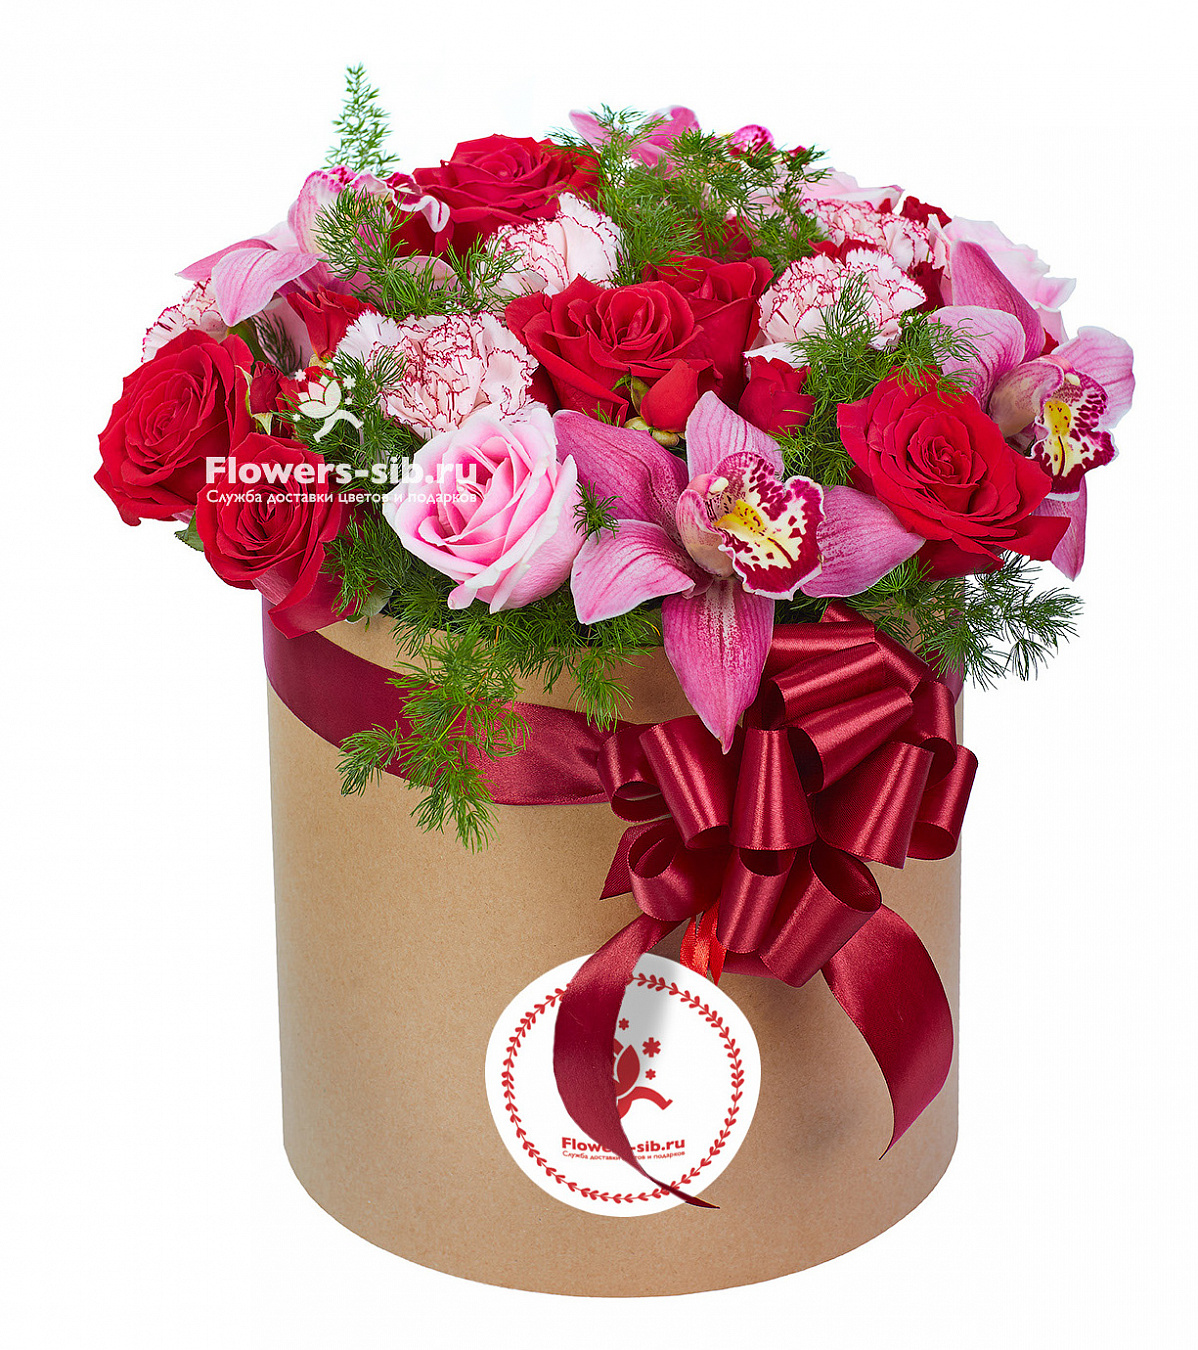 Сиб цветок. Весенняя коробка с цветами подарочная закрытая. Фловерс Сиб Петрозаводск.